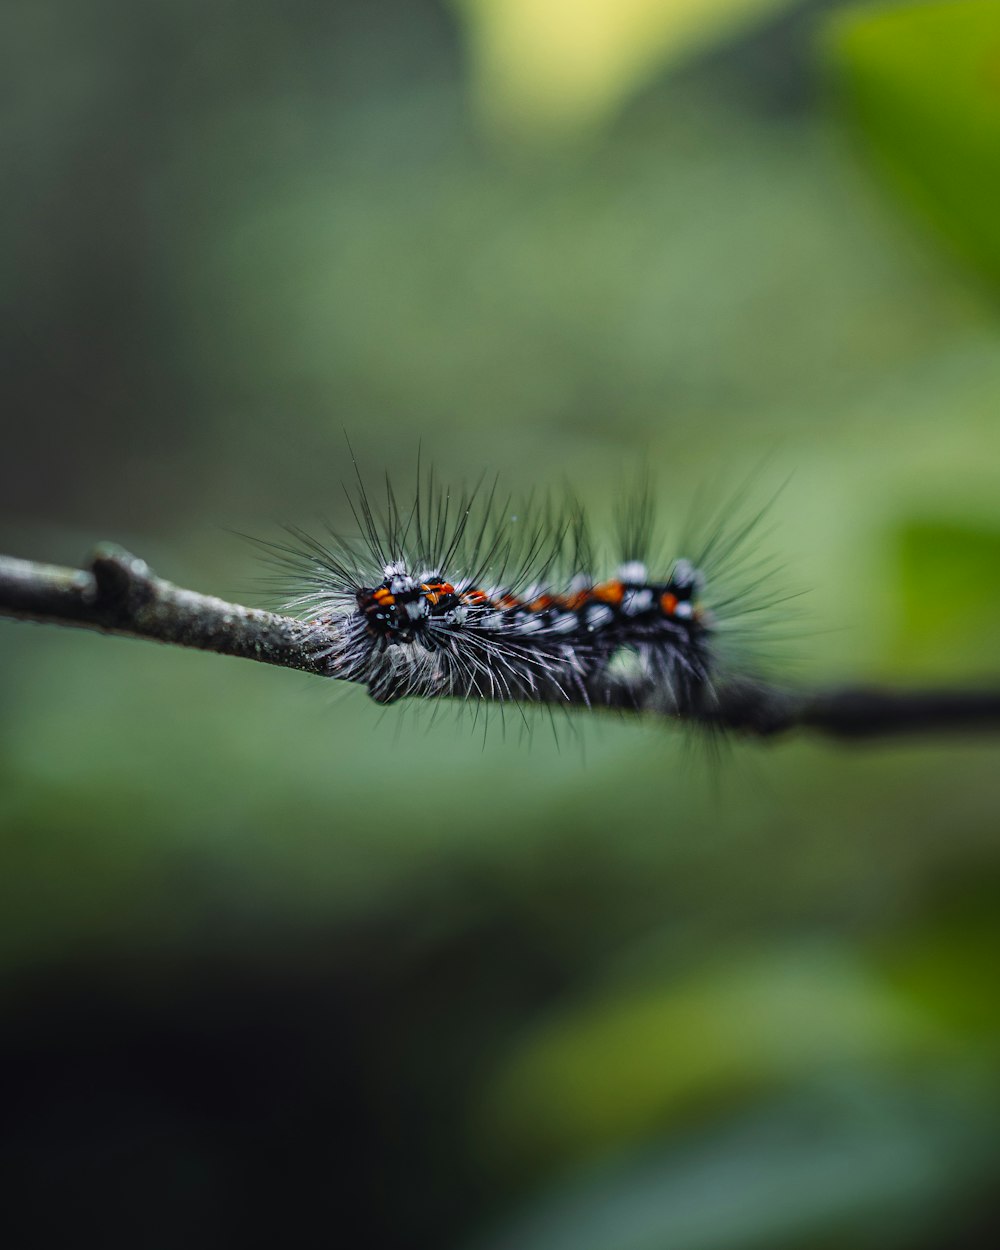 a close up of a caterpillar on a branch